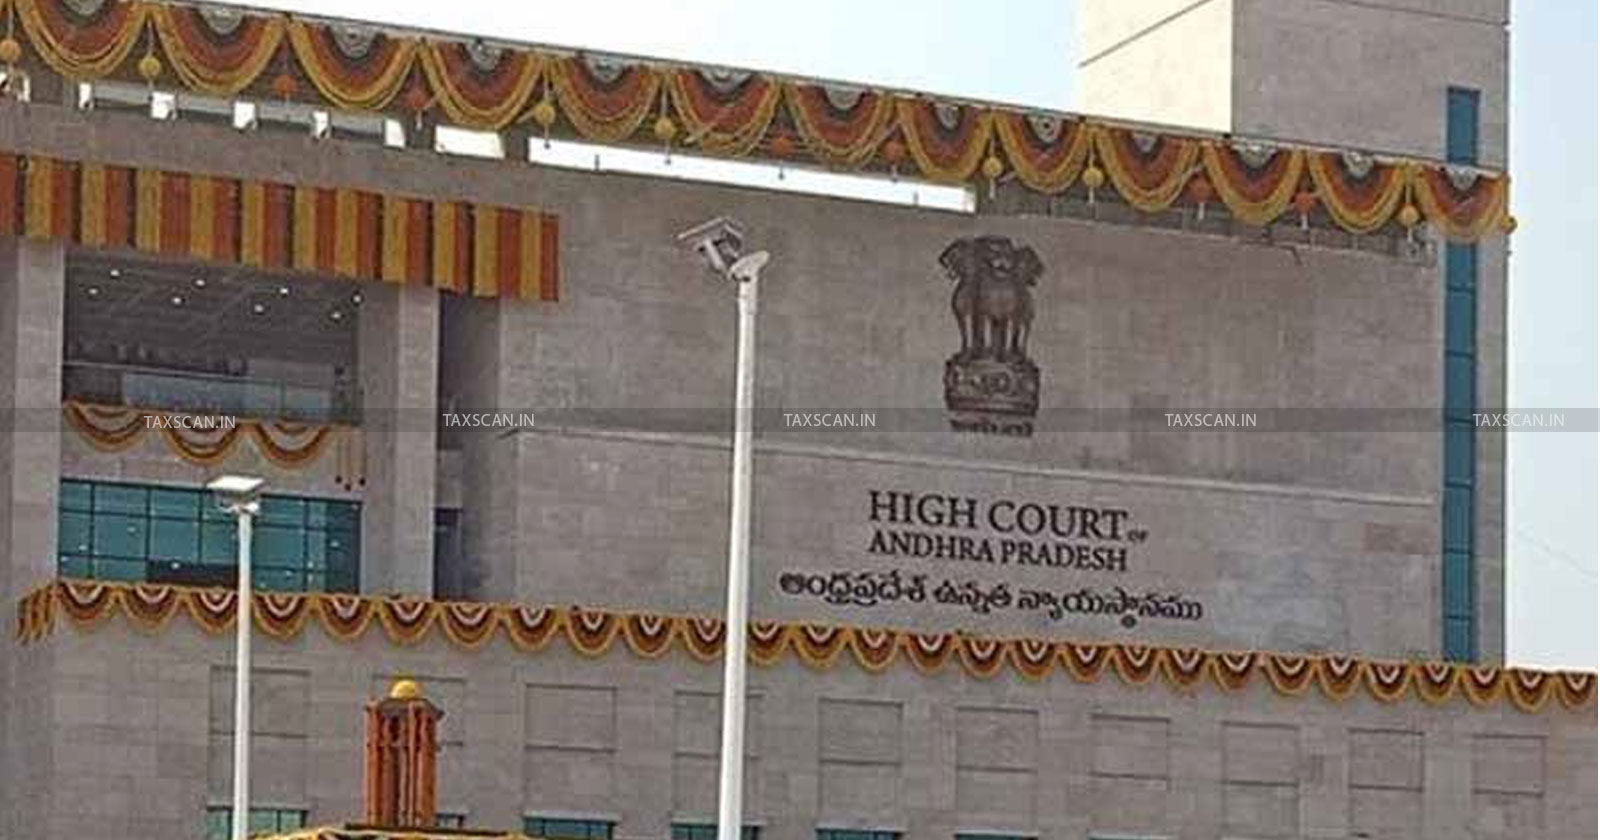 Andhra Pradesh High court - Input Tax Credit - ITC - GST Act - TAXSCAN